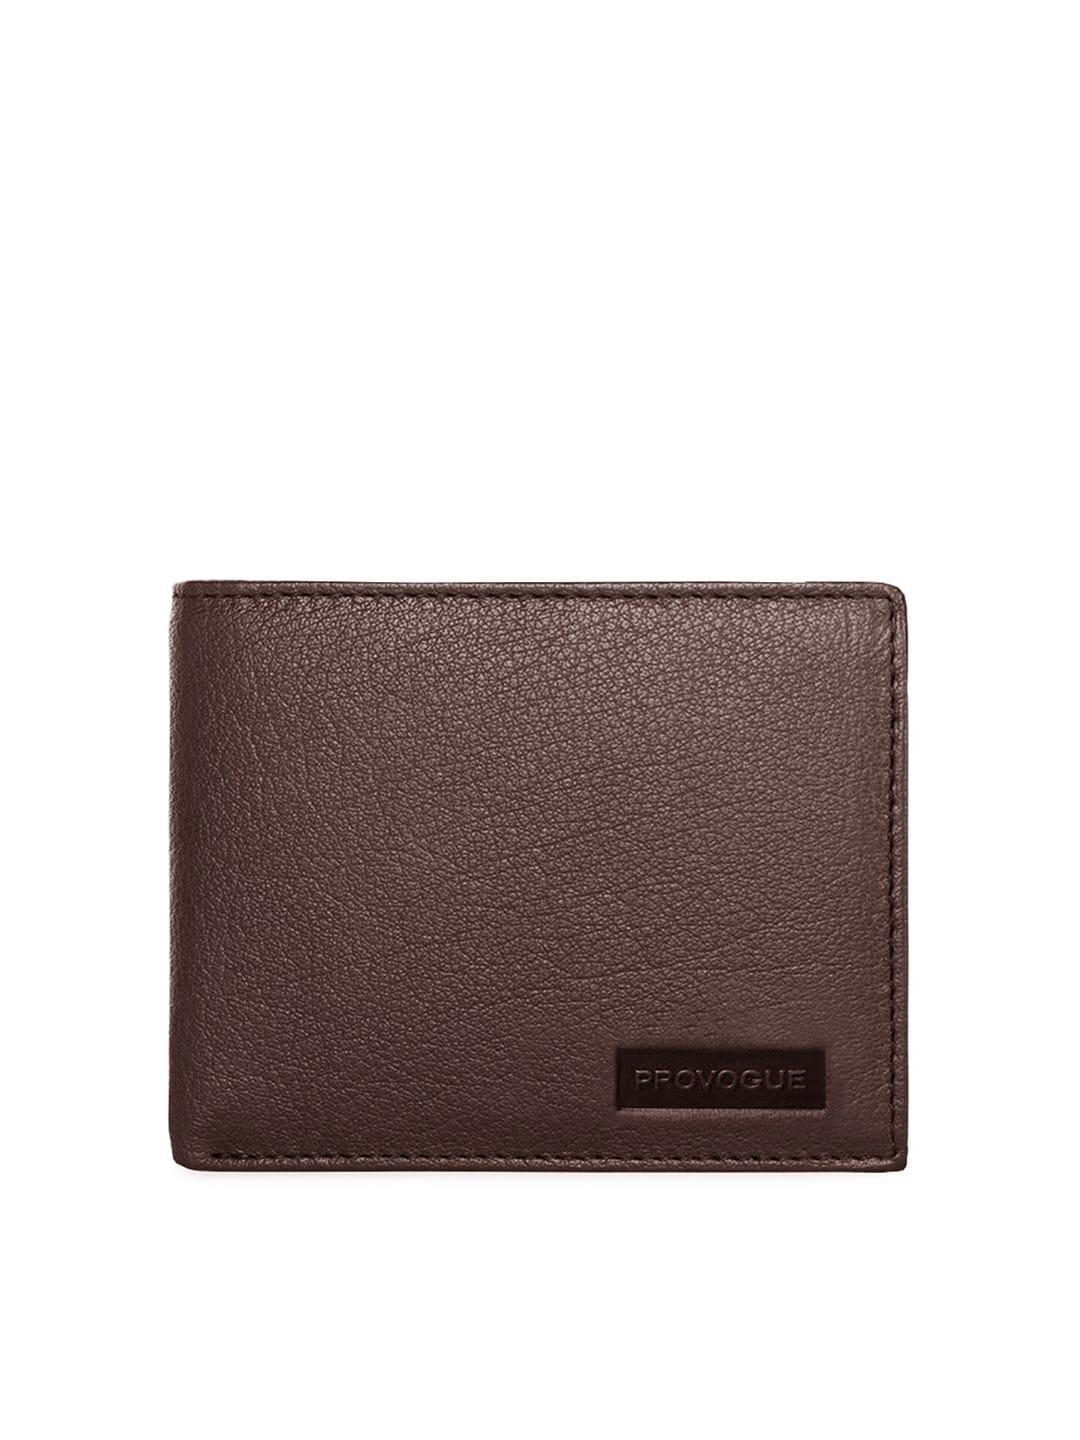 provogue men brown & black leather two fold wallet